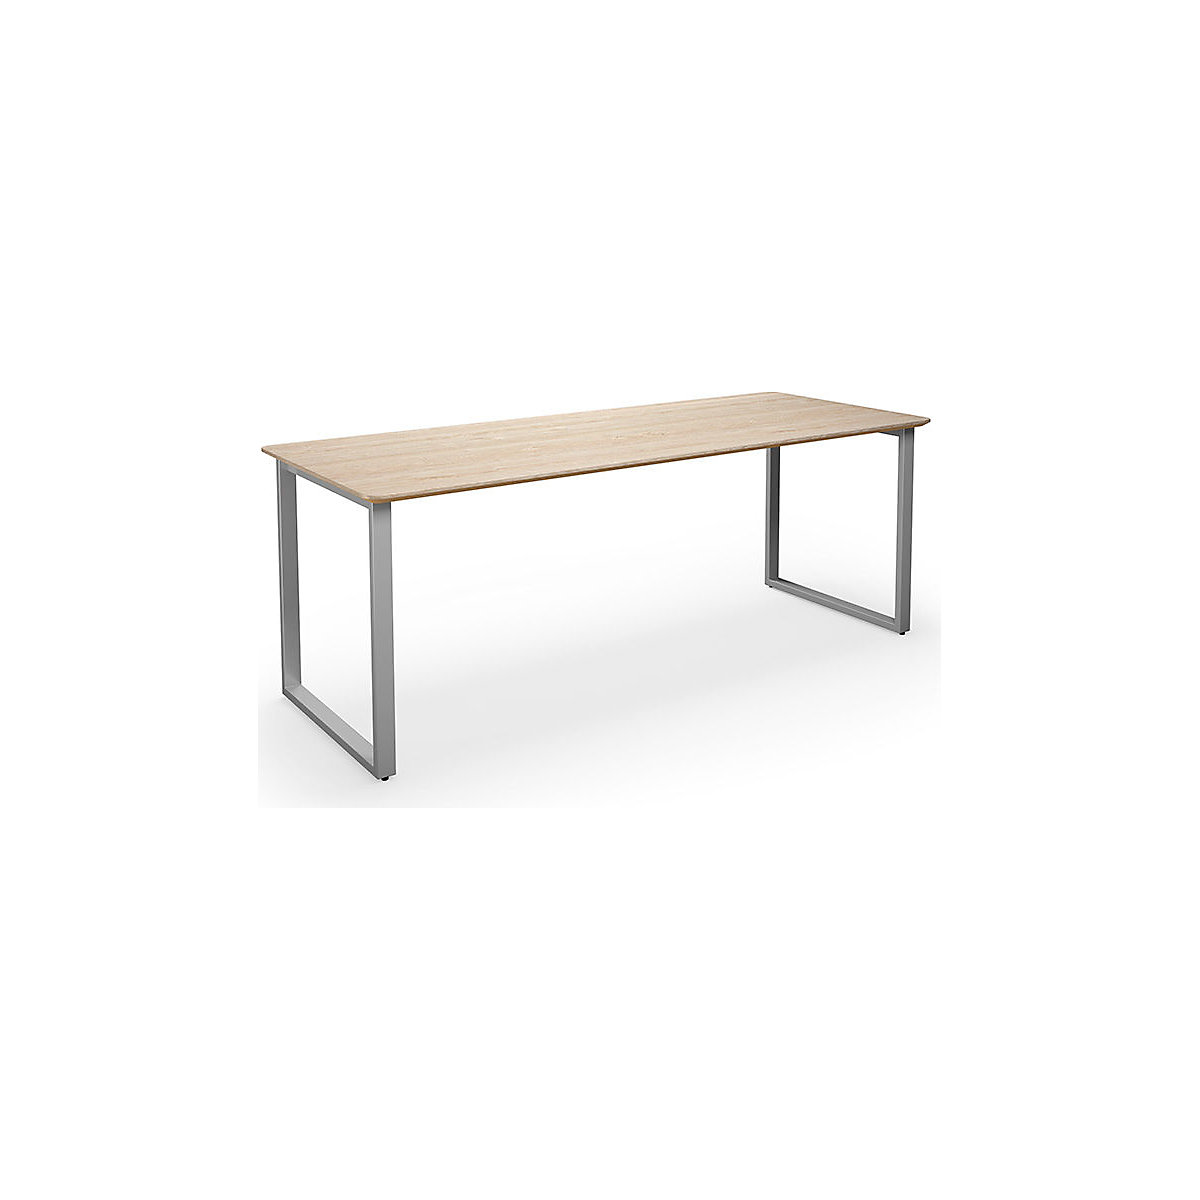 DUO-O Trend multi-purpose desk, straight tabletop, rounded corners, WxD 2000 x 800 mm, oak, silver-4